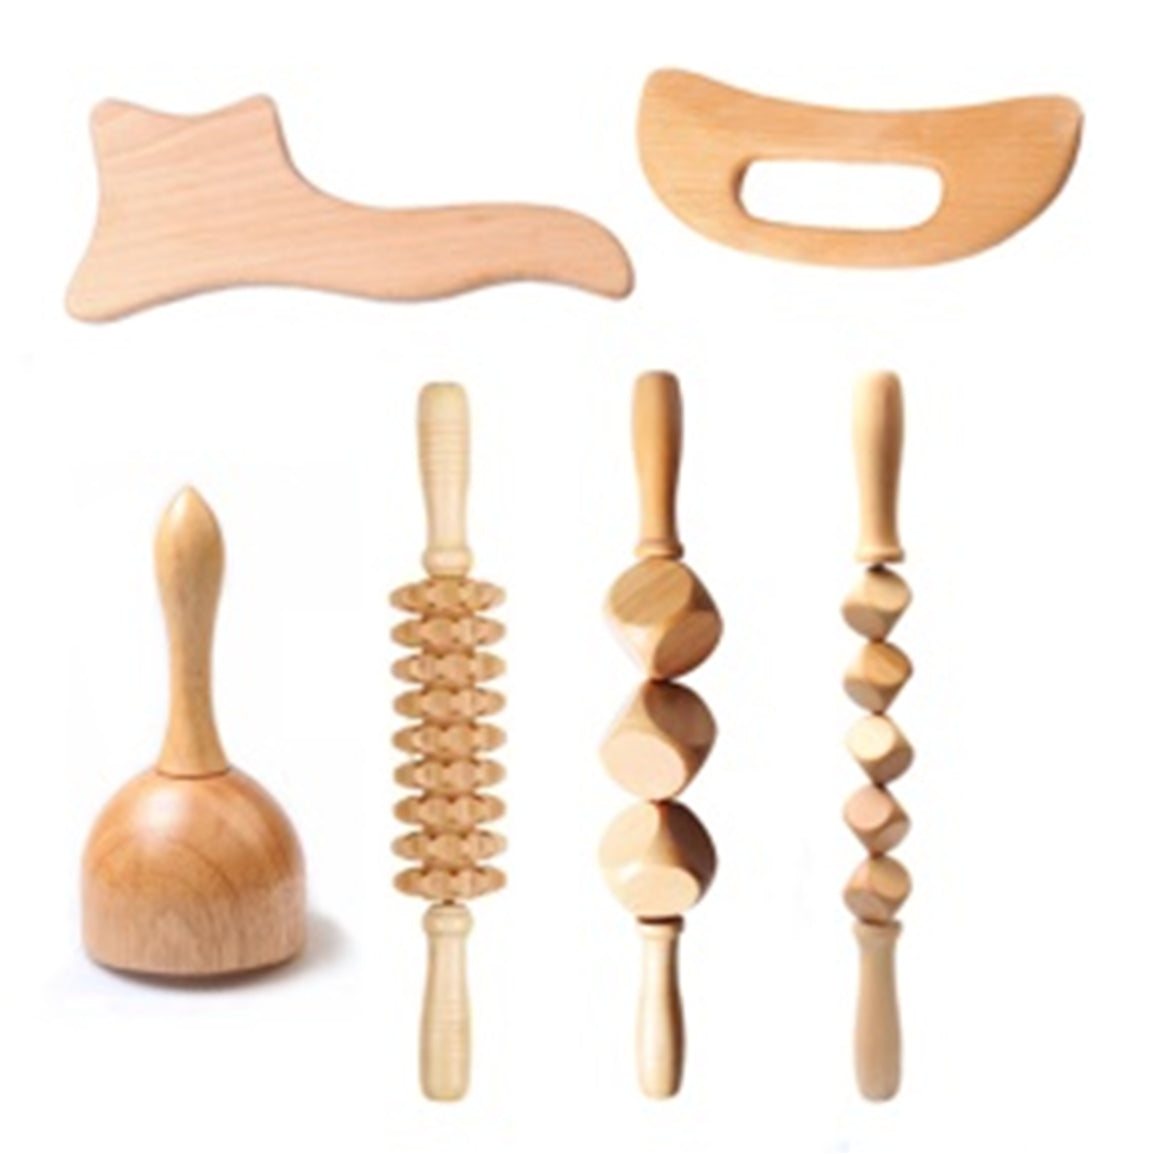 Wood Massage Stick Wood Roller Lymphatic Drainage Massager  kit Wood Therapy Massage Tools